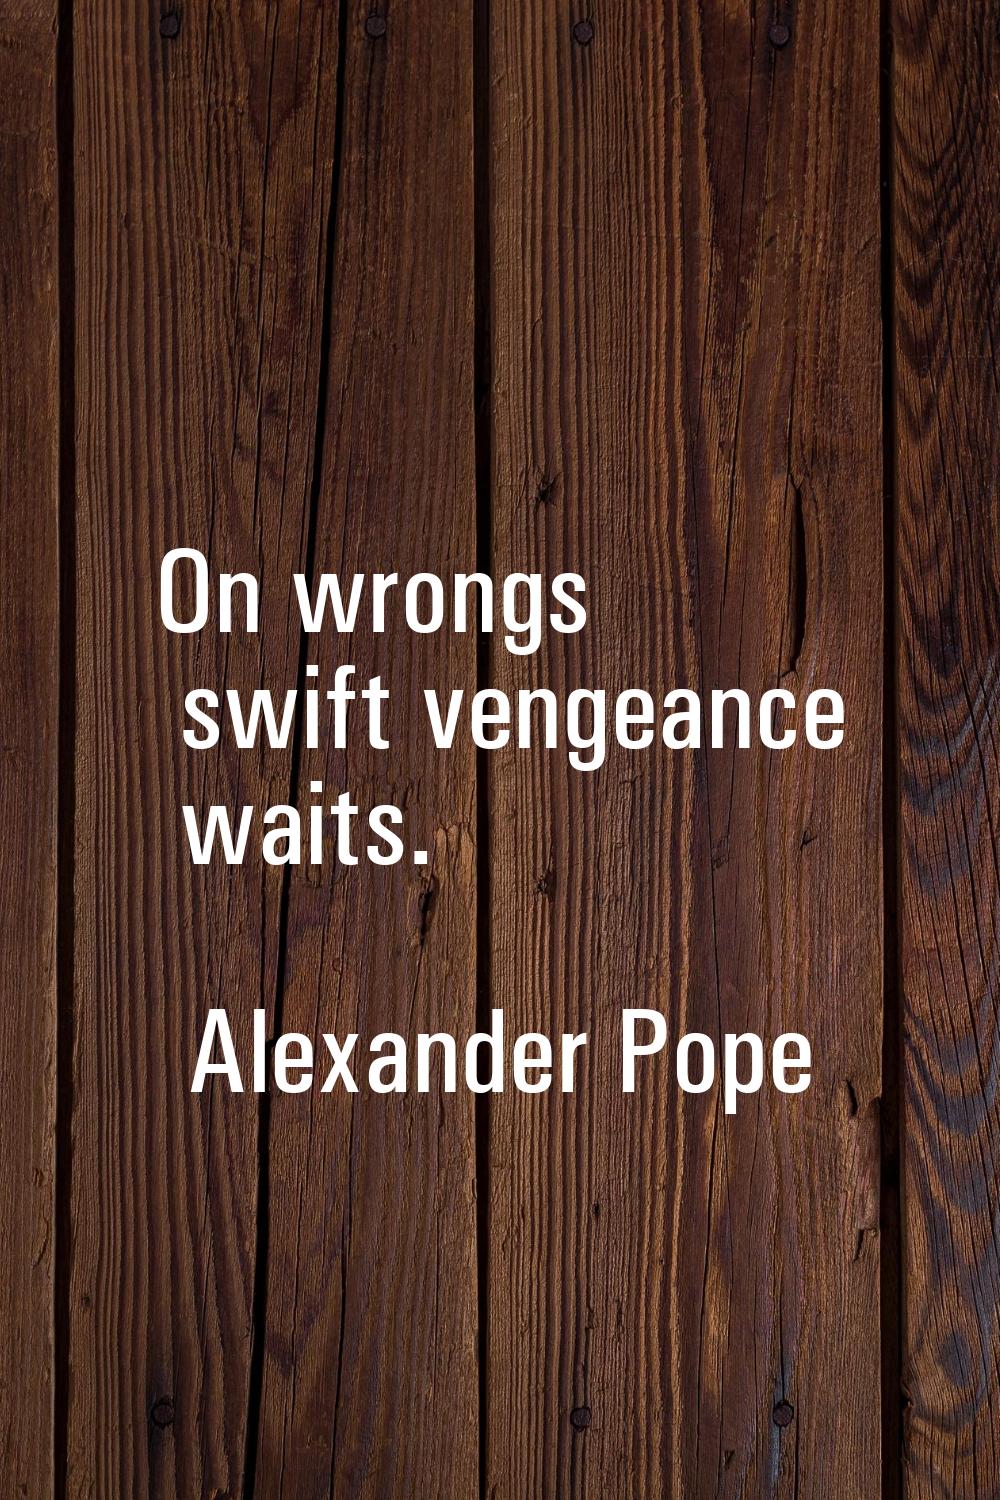 On wrongs swift vengeance waits.